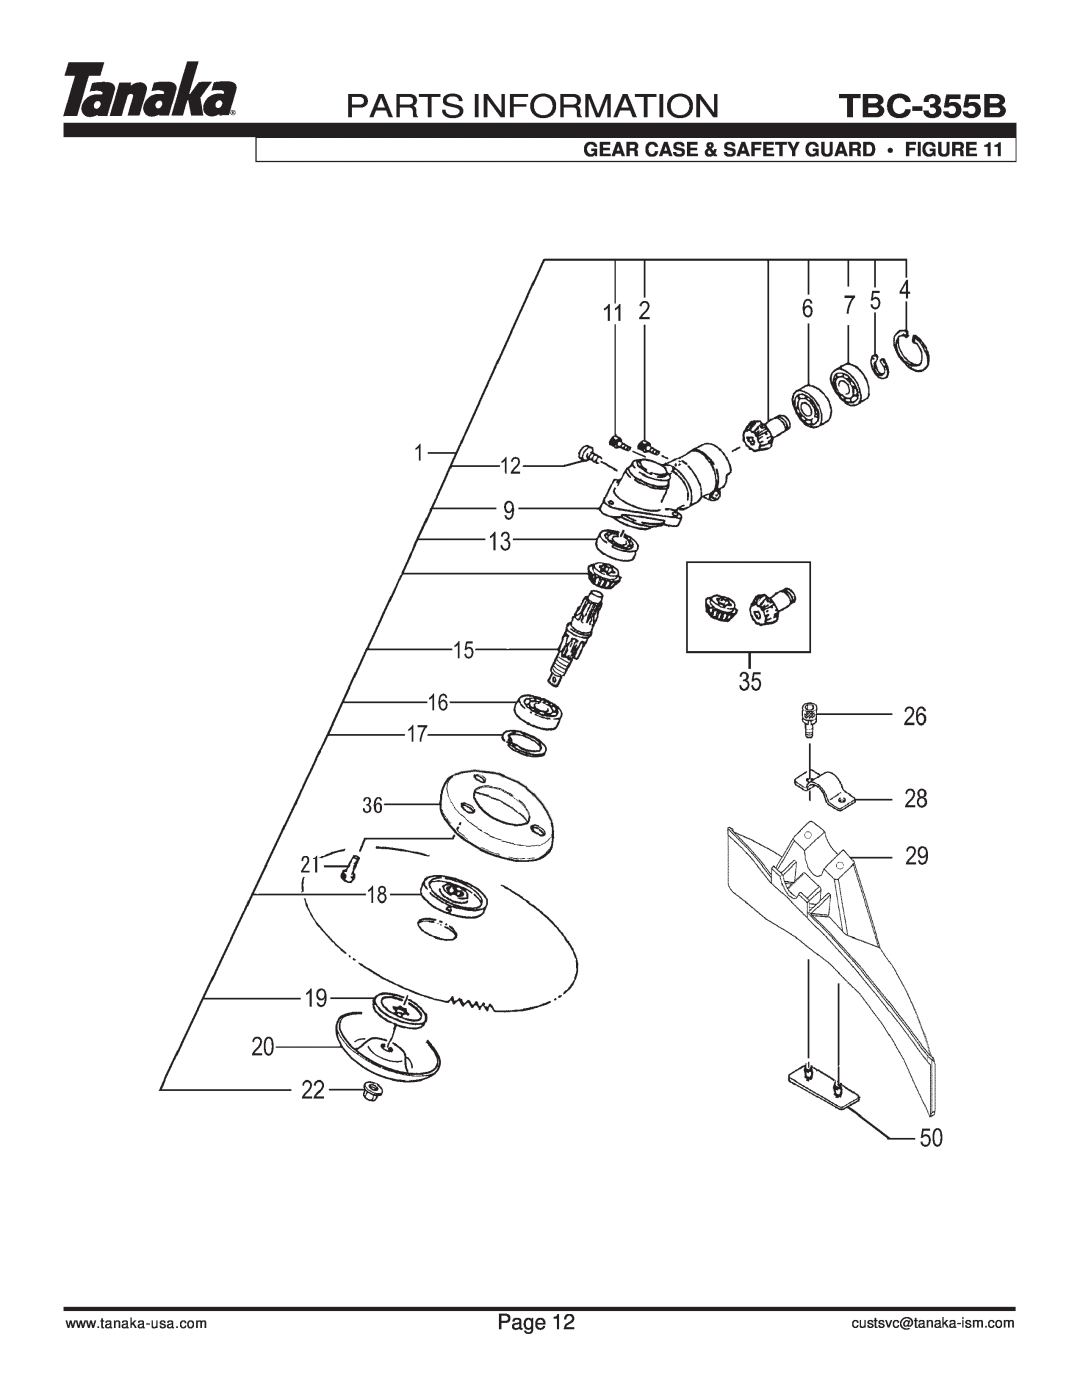 Tanaka manual Gear Case & Safety Guard • Figure, PARTS INFORMATION TBC-355B, Page, custsvc@tanaka-ism.com 